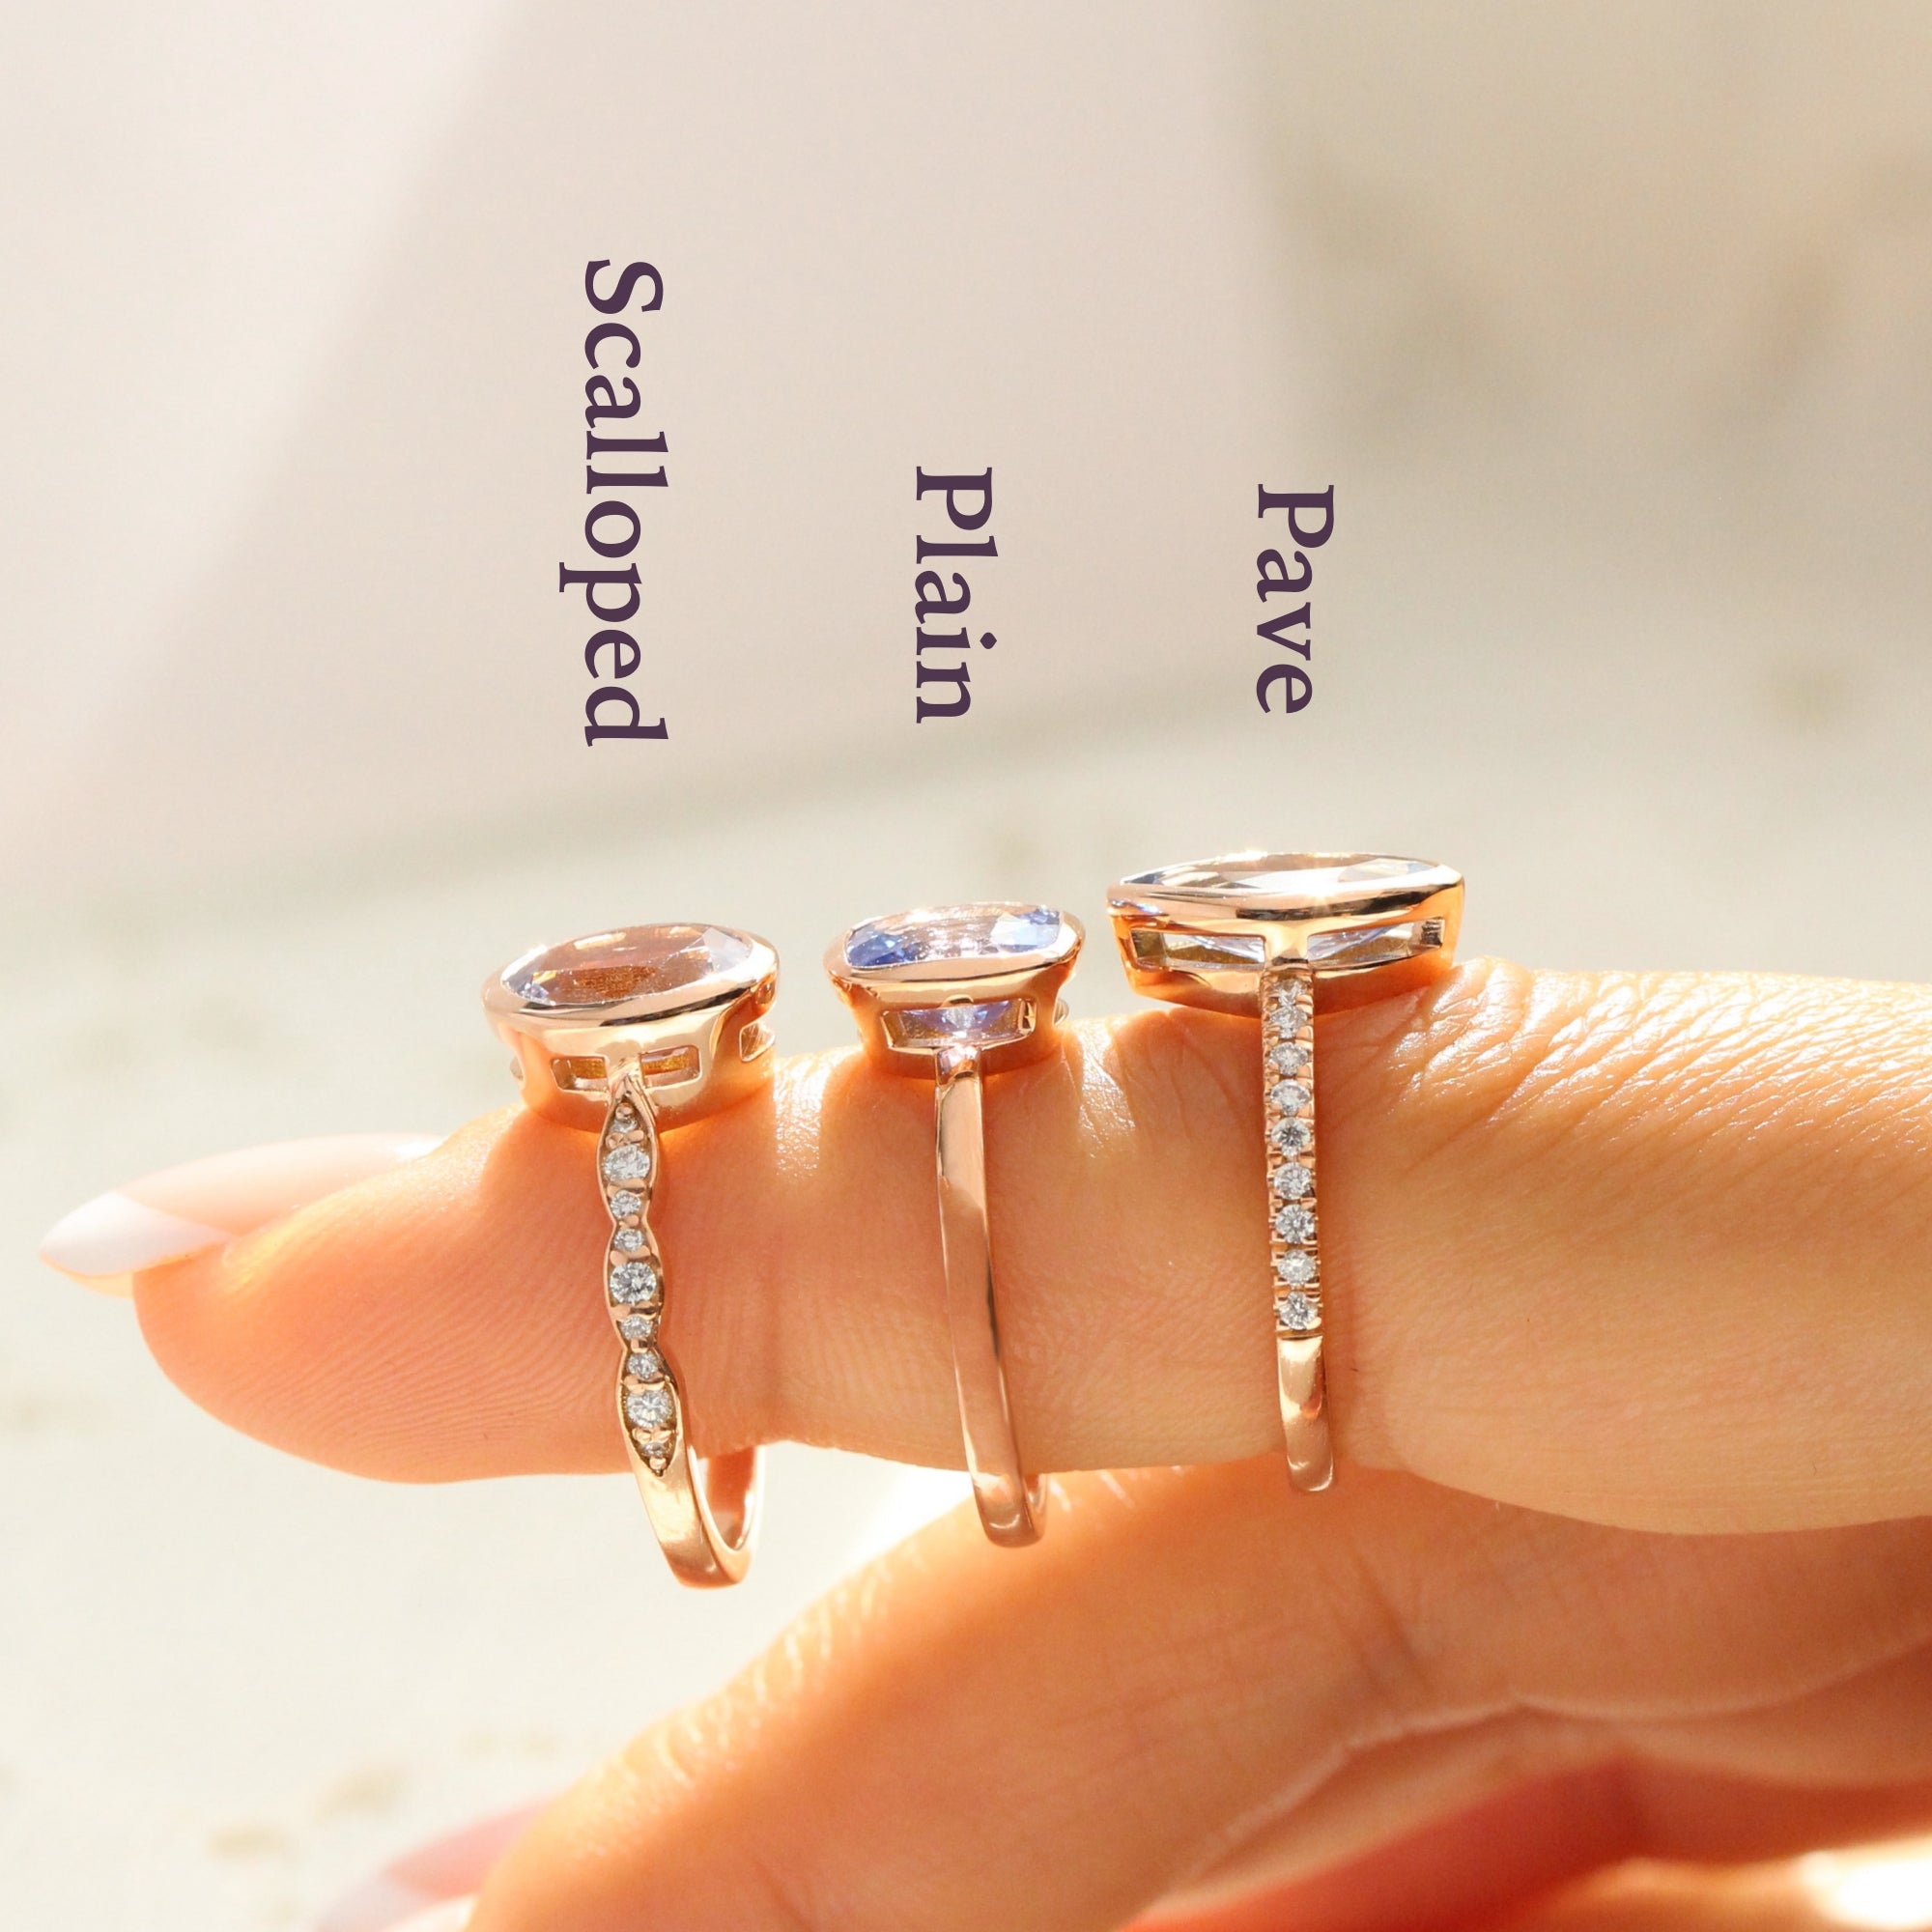 Oval lavender sapphire ring rose gold bezel solitaire scalloped diamond band la more design jewelry